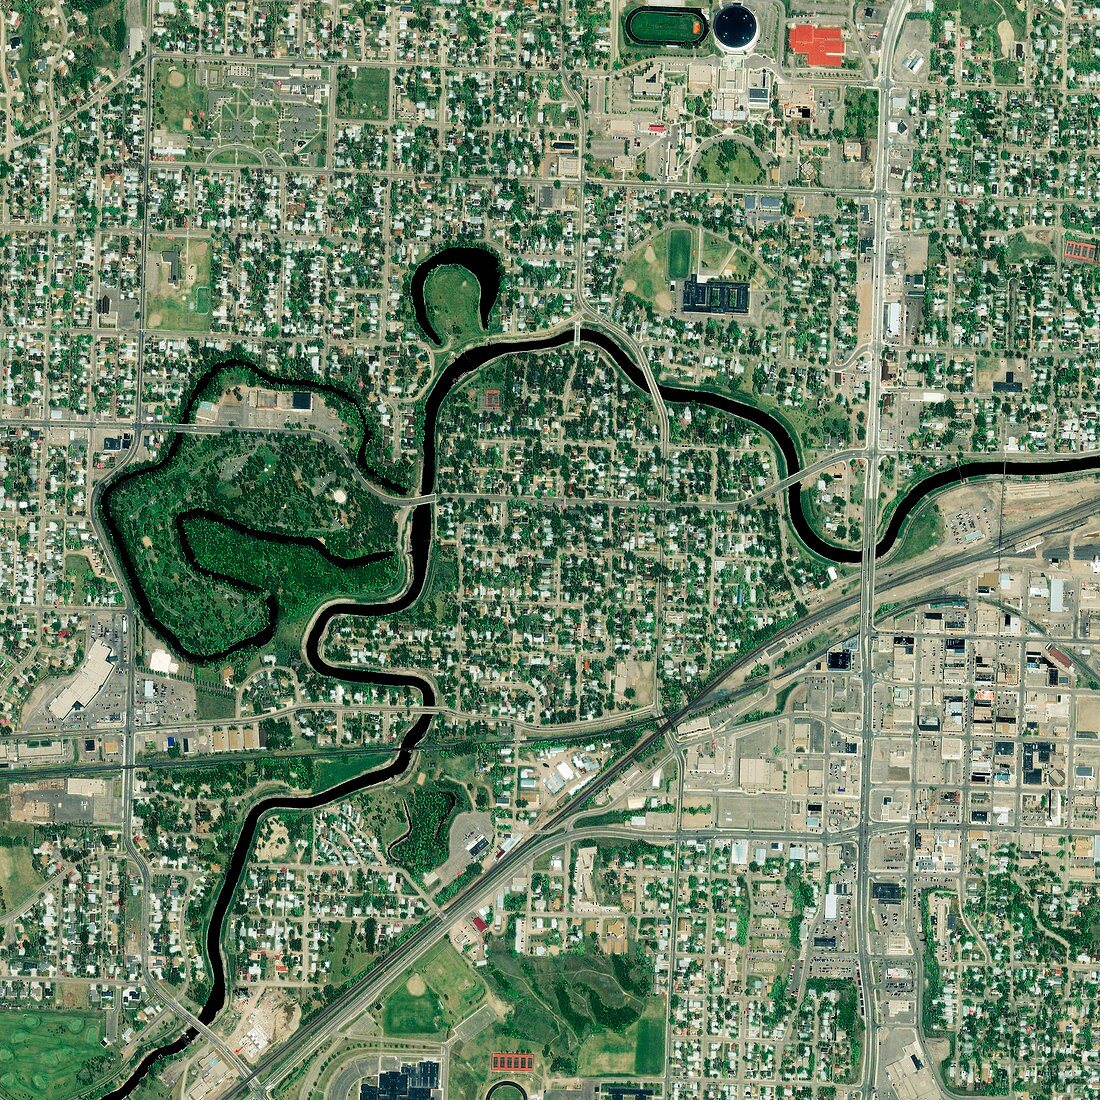 Minot,North Dakota,USA,satellite image